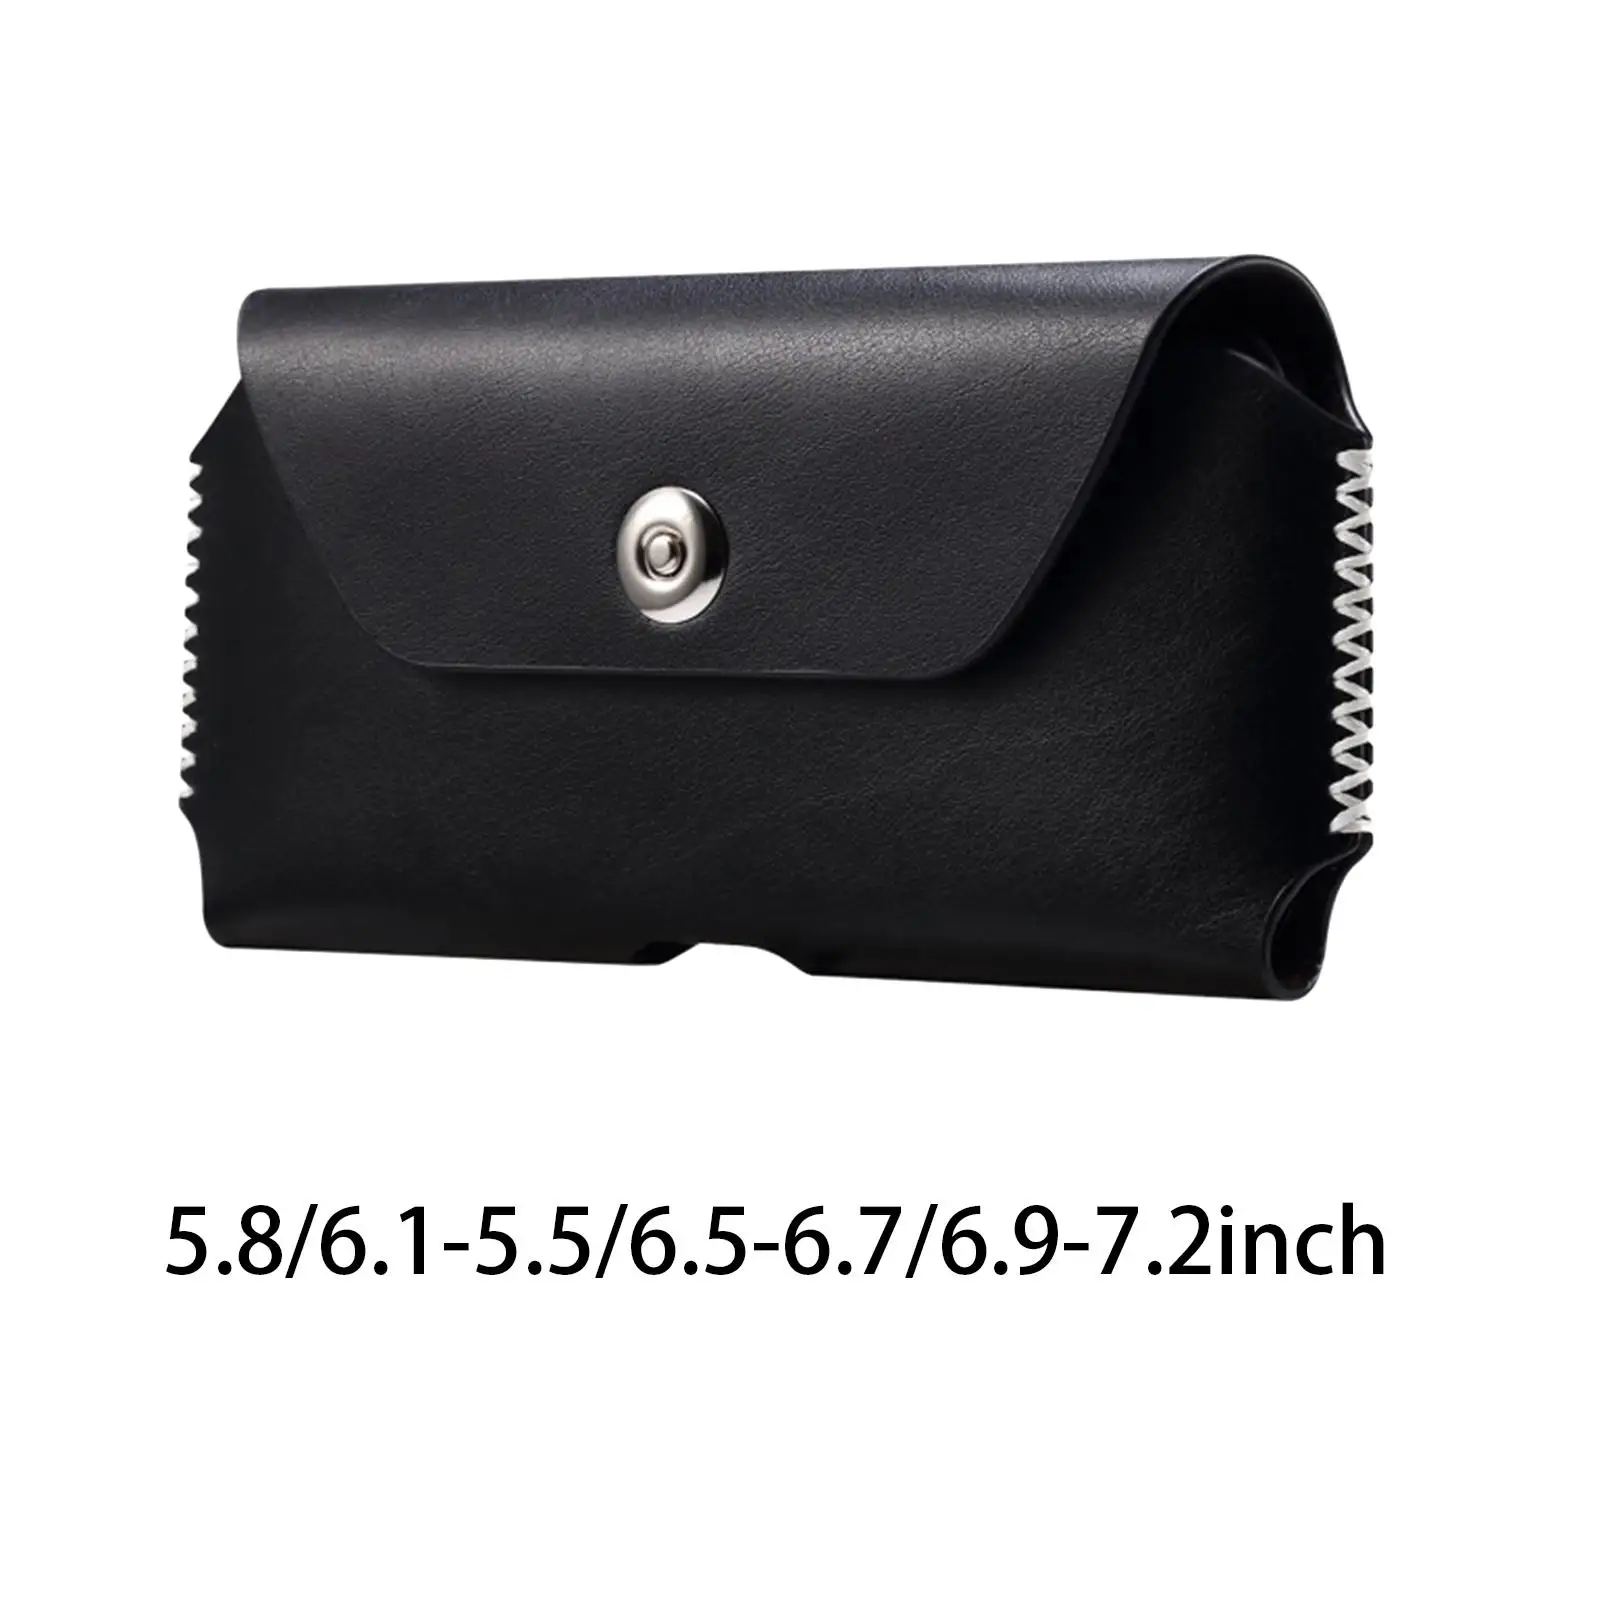 Slim PU Leather Belt Pouch for Phone Waist Bag Splash Proof Outdoor Holster Belt Bag Men Gift for iOS Android Phones Black